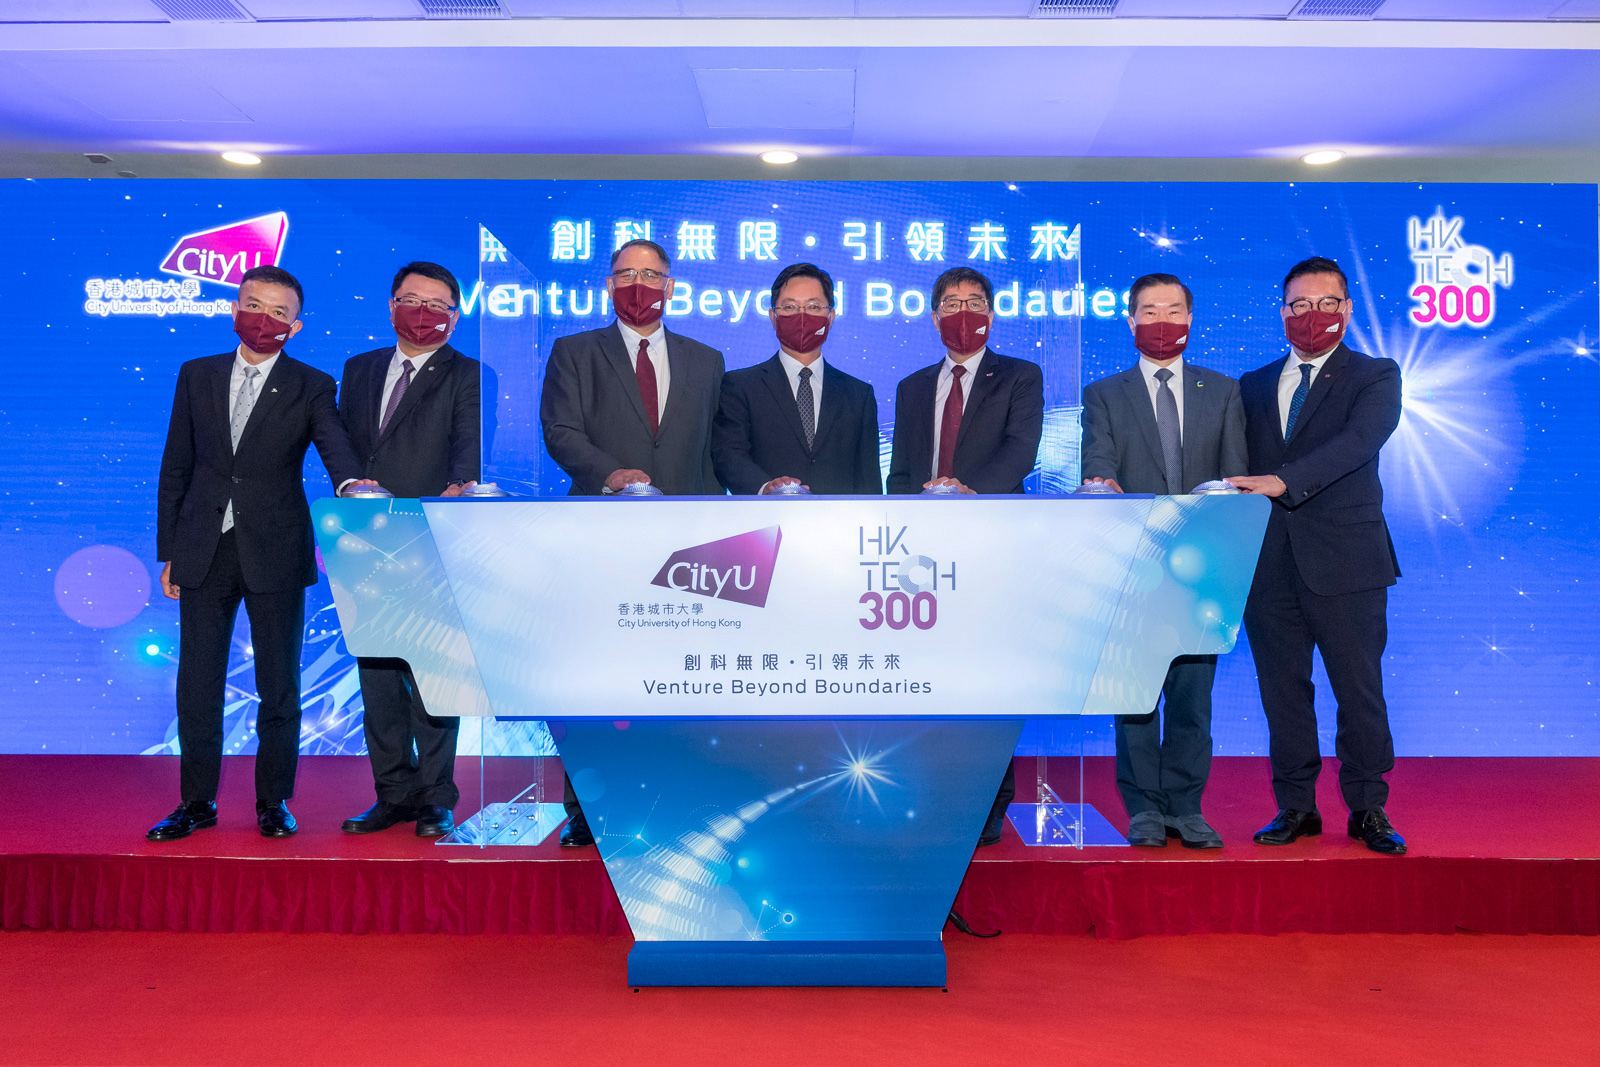 CityU launches HK Tech 300 to establish 300 start-ups with HK$500m